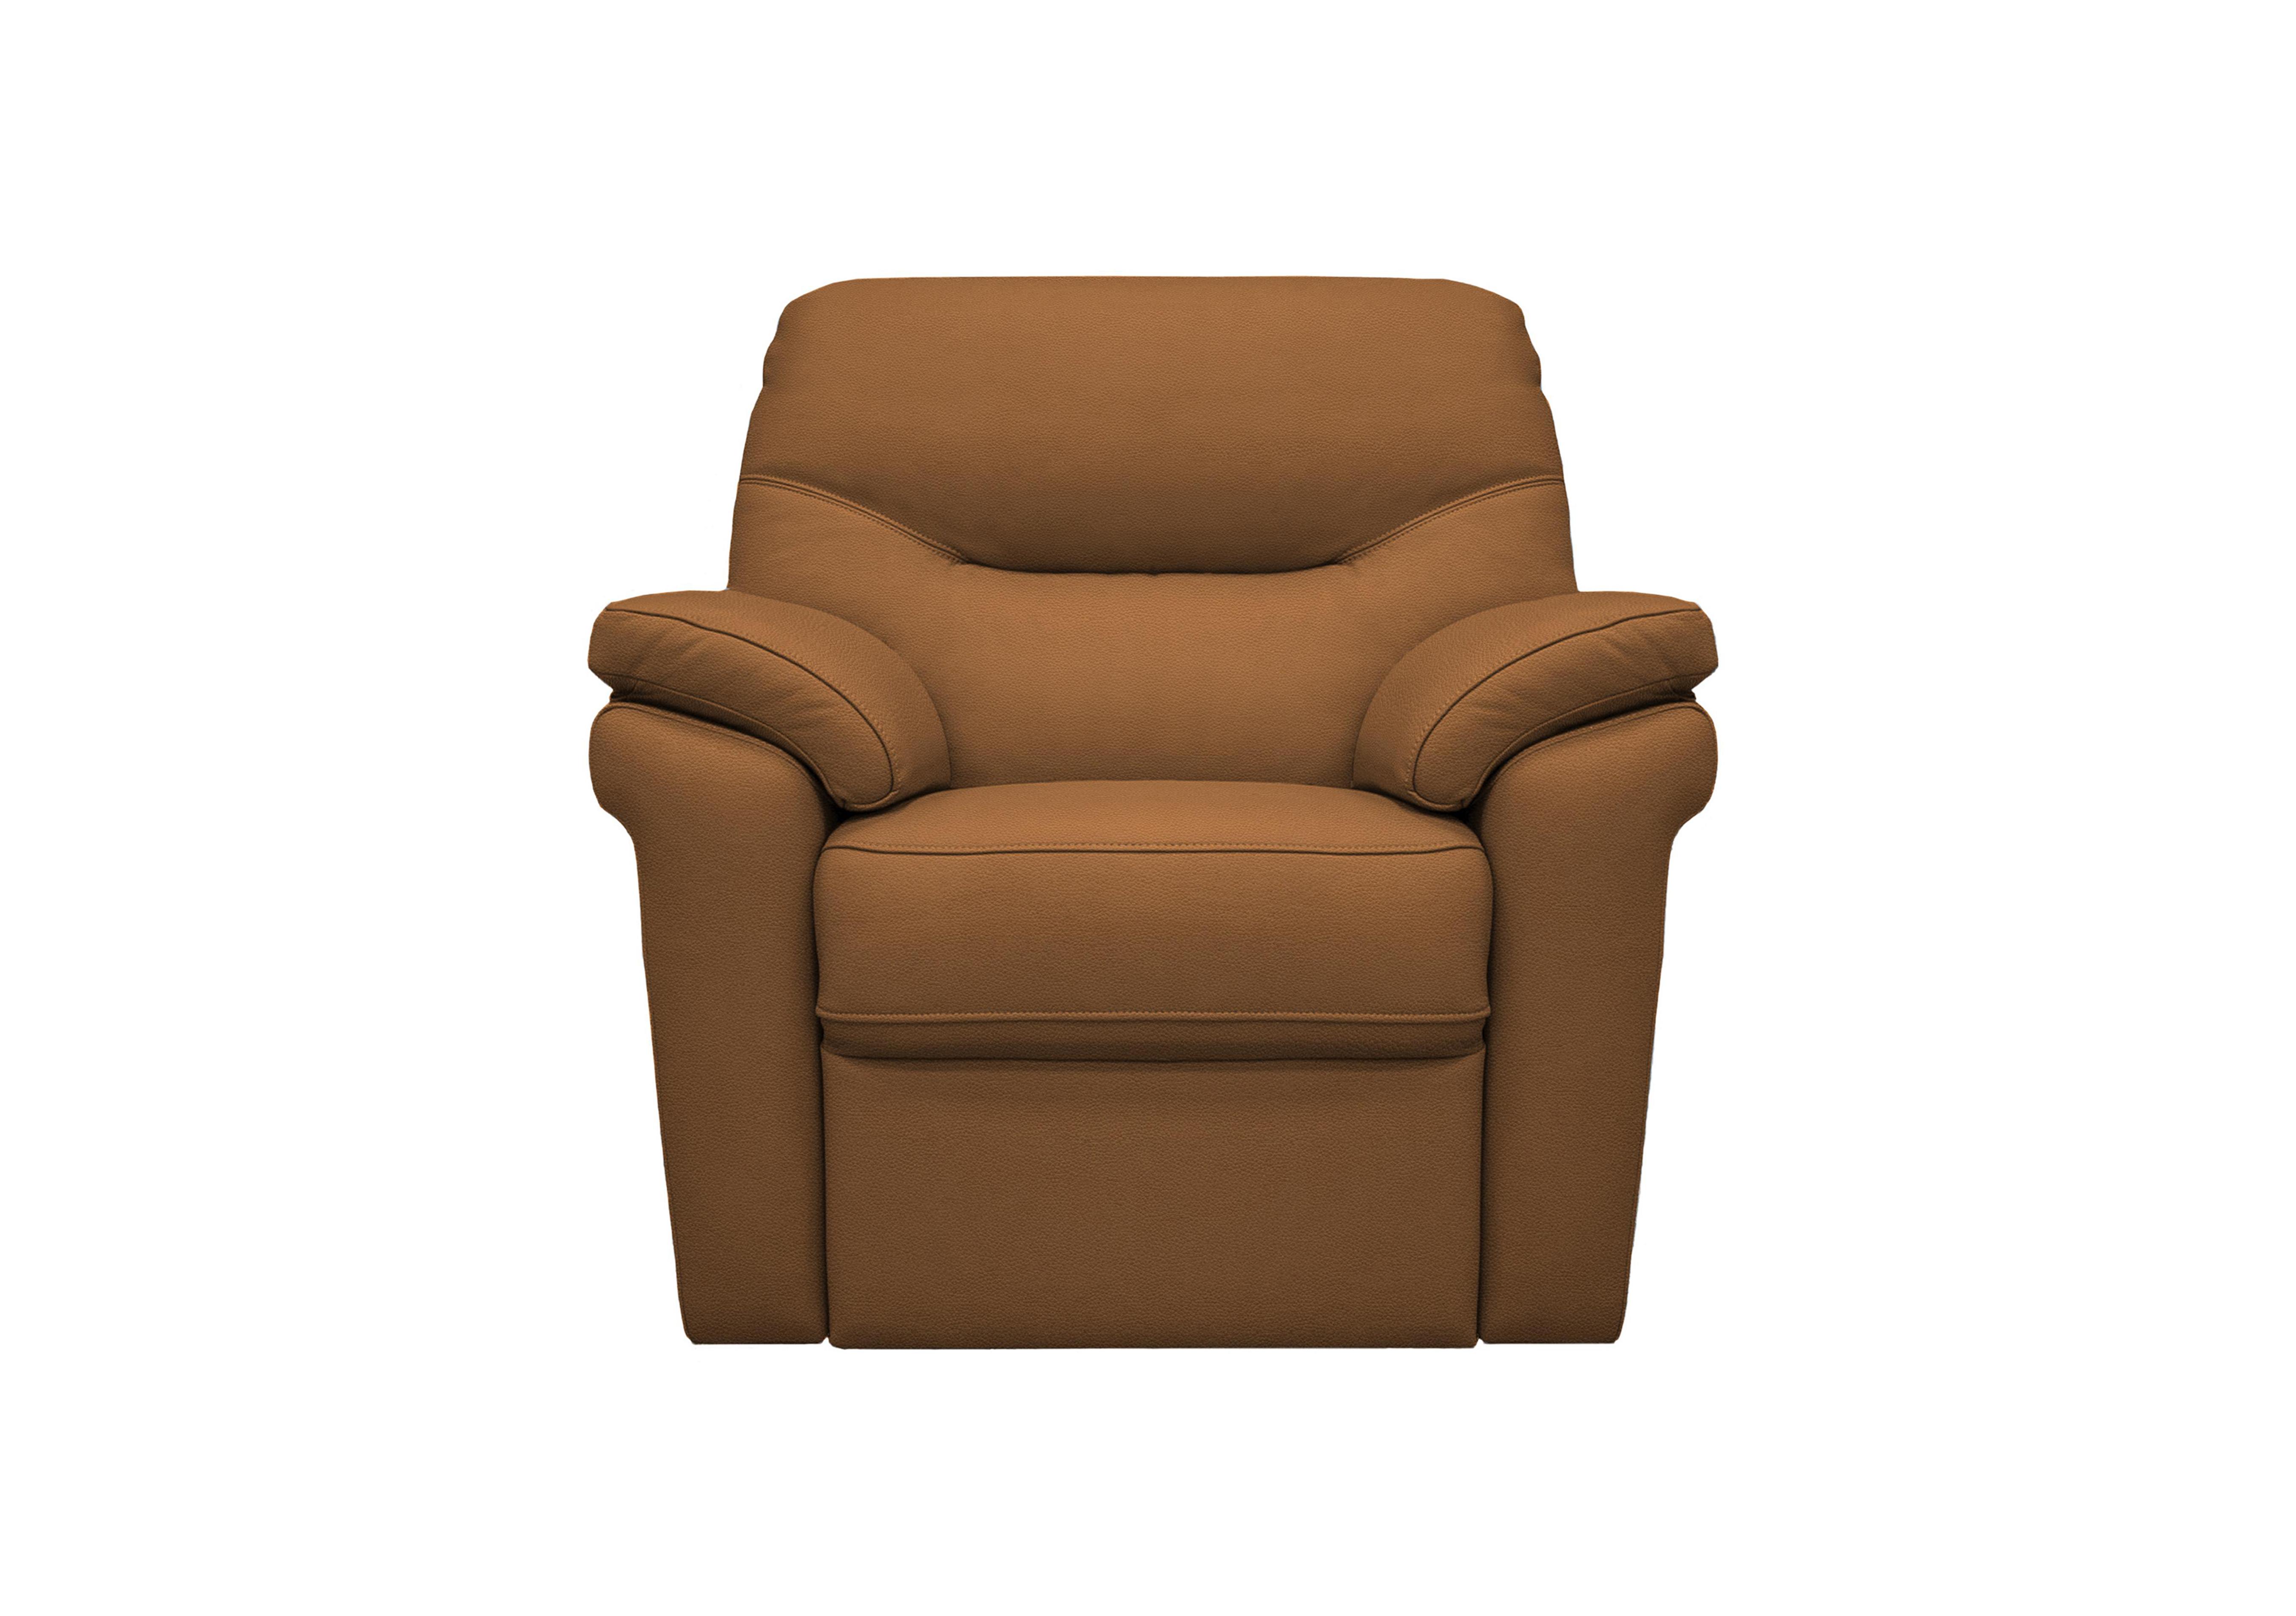 Seattle Leather Armchair in L847 Cambridge Tan on Furniture Village